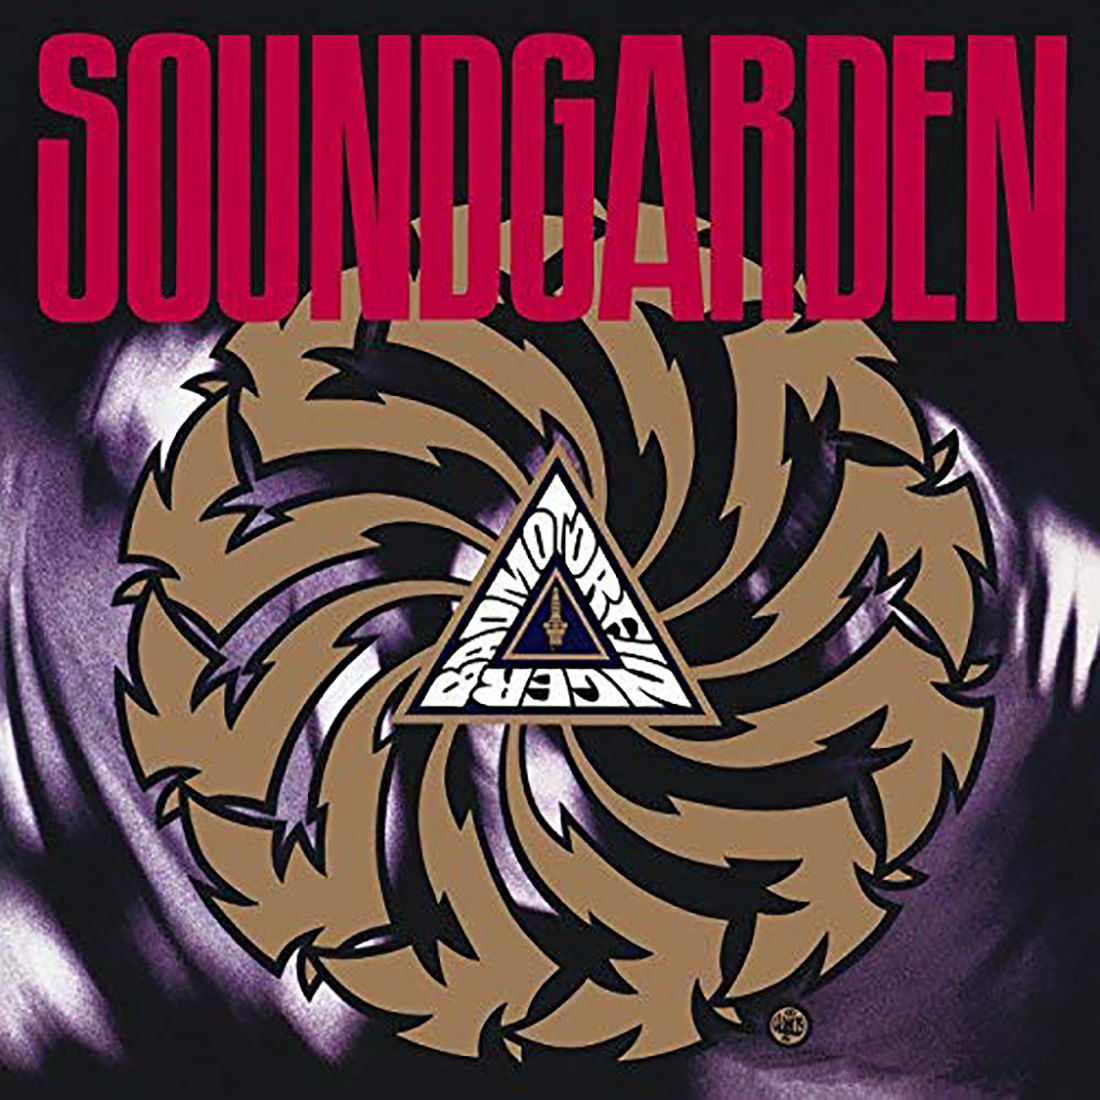 Soundgarden - Badmotorfinger: Vinyl LP